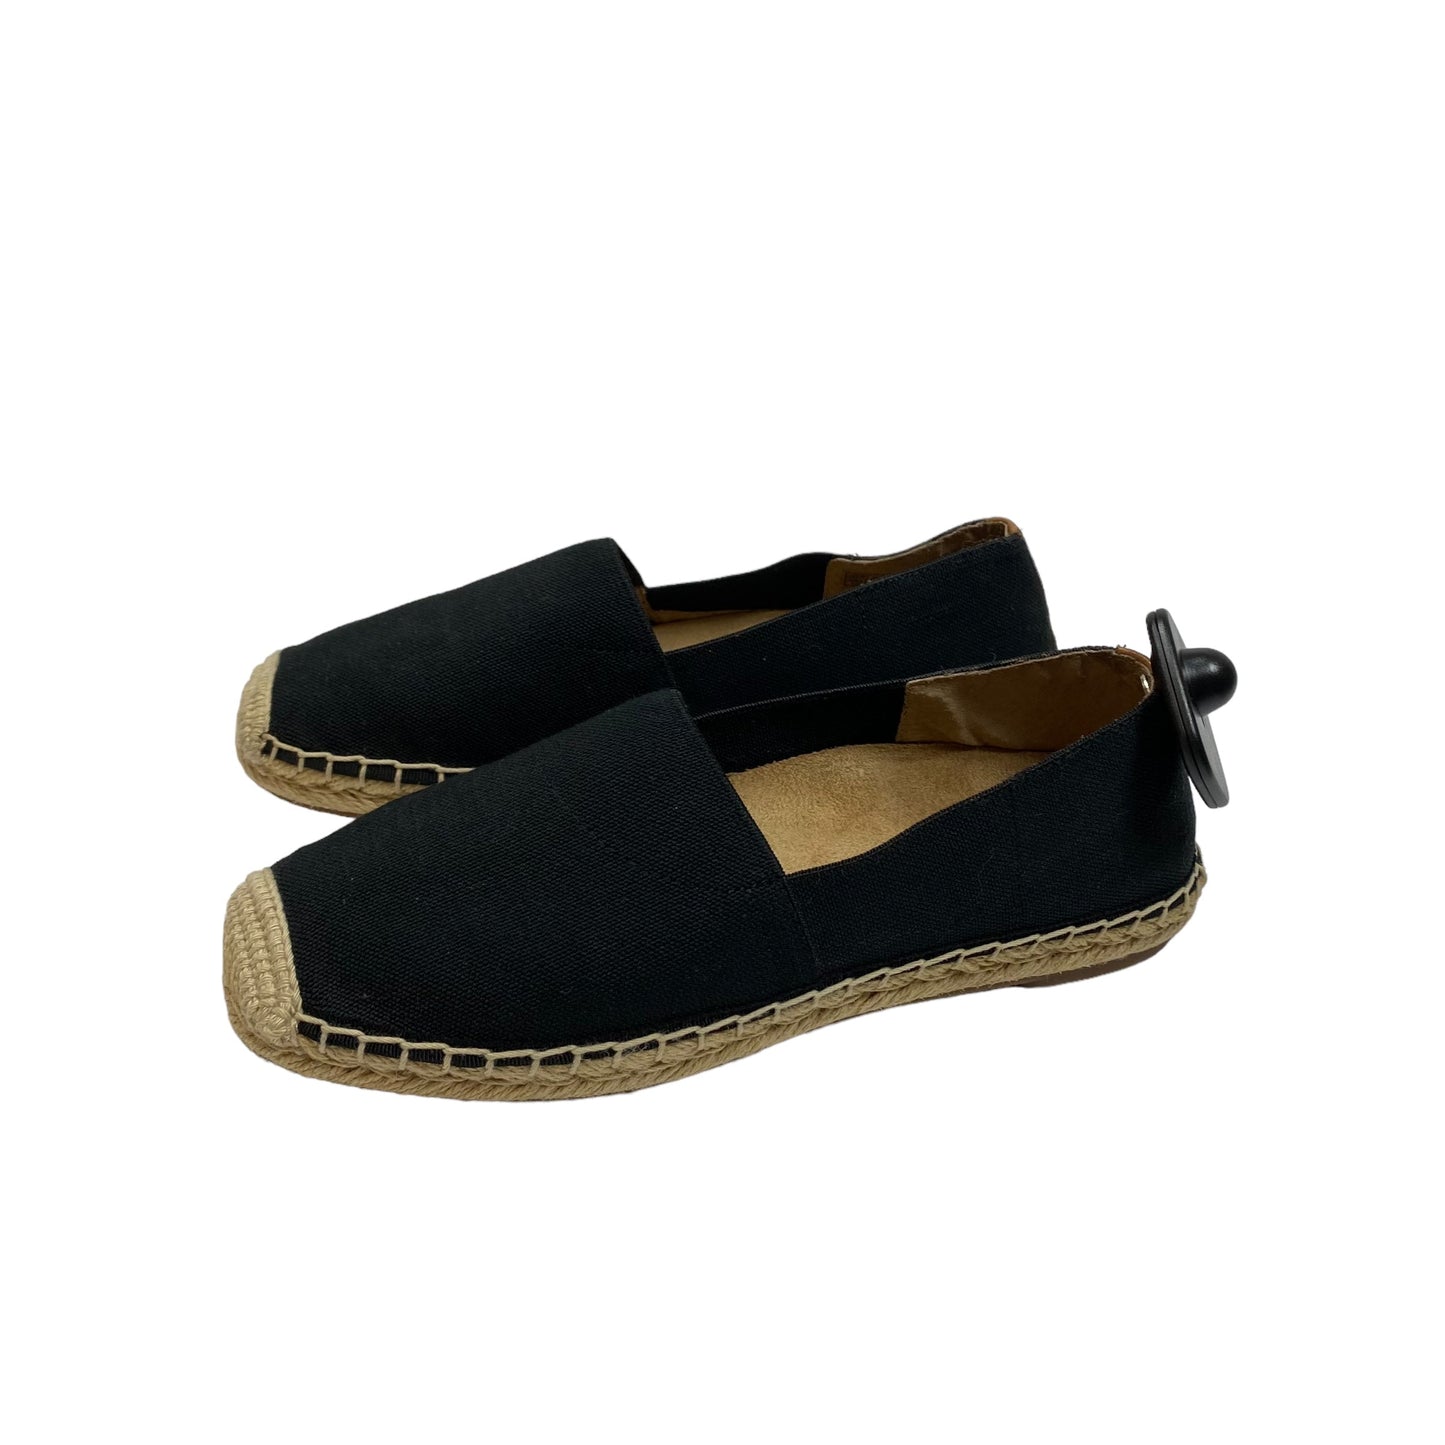 Black Shoes Flats Vionic, Size 6.5